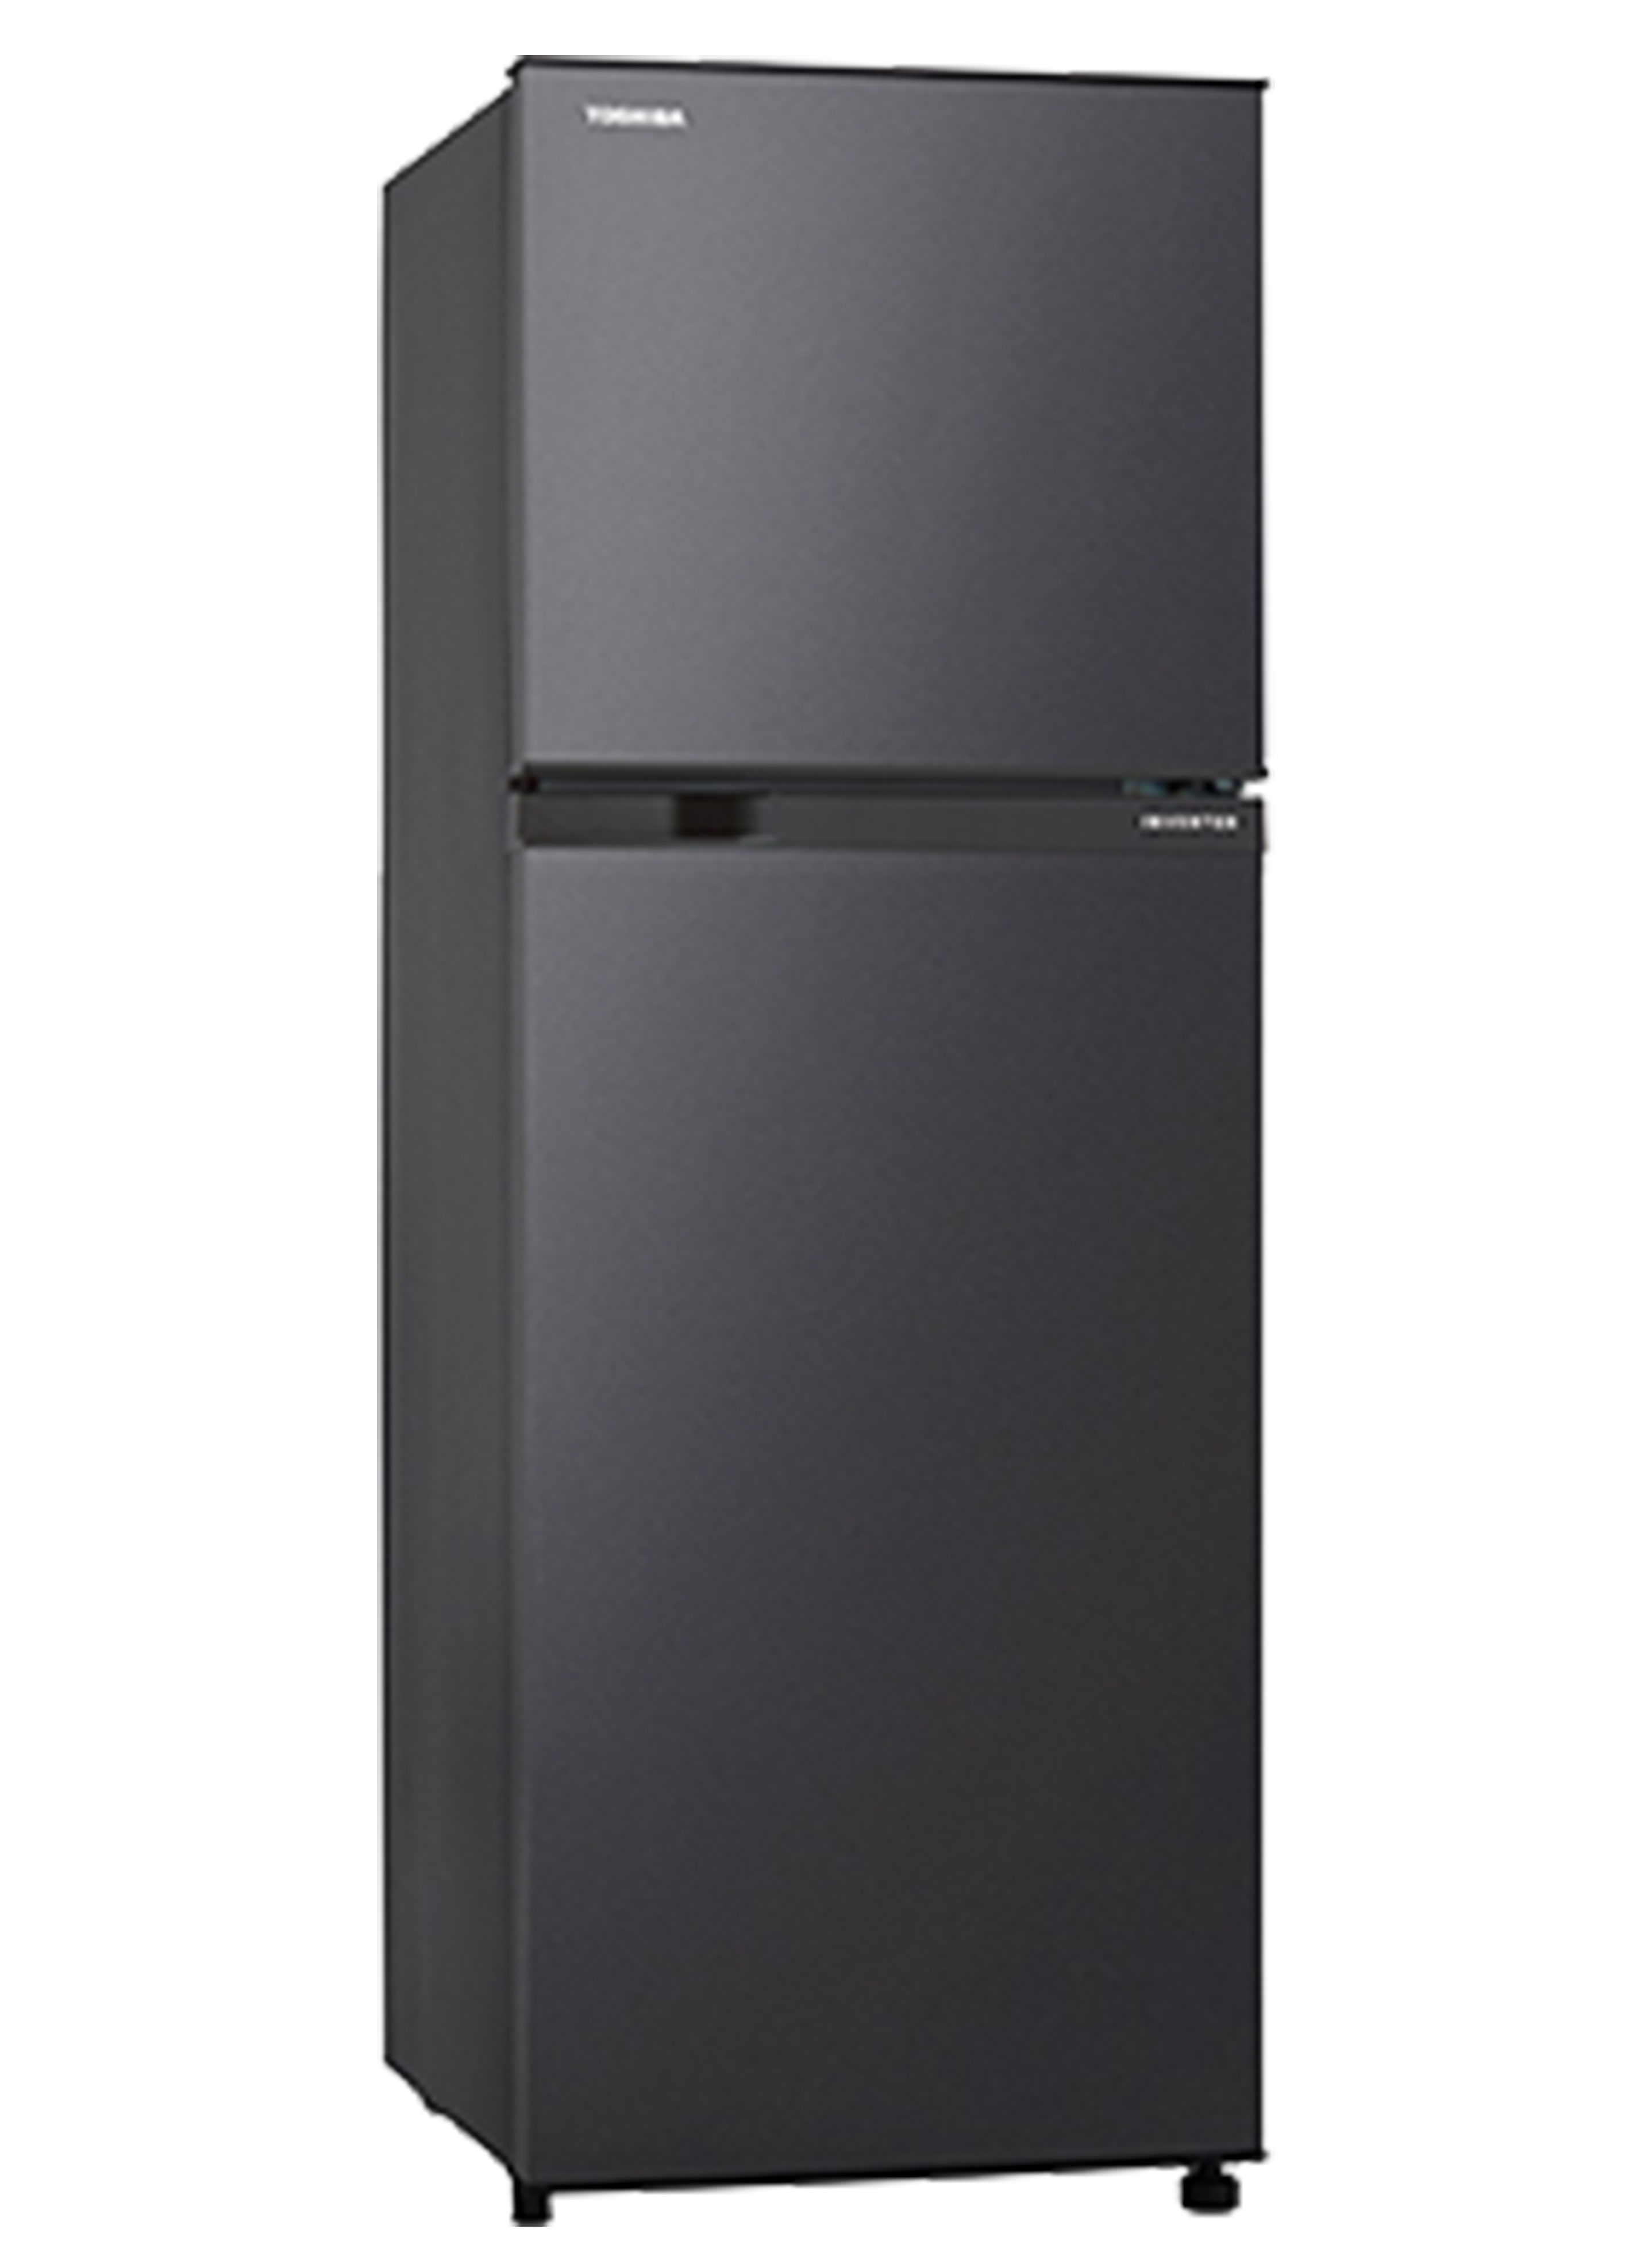 Invertor Refrigerator Shine Black